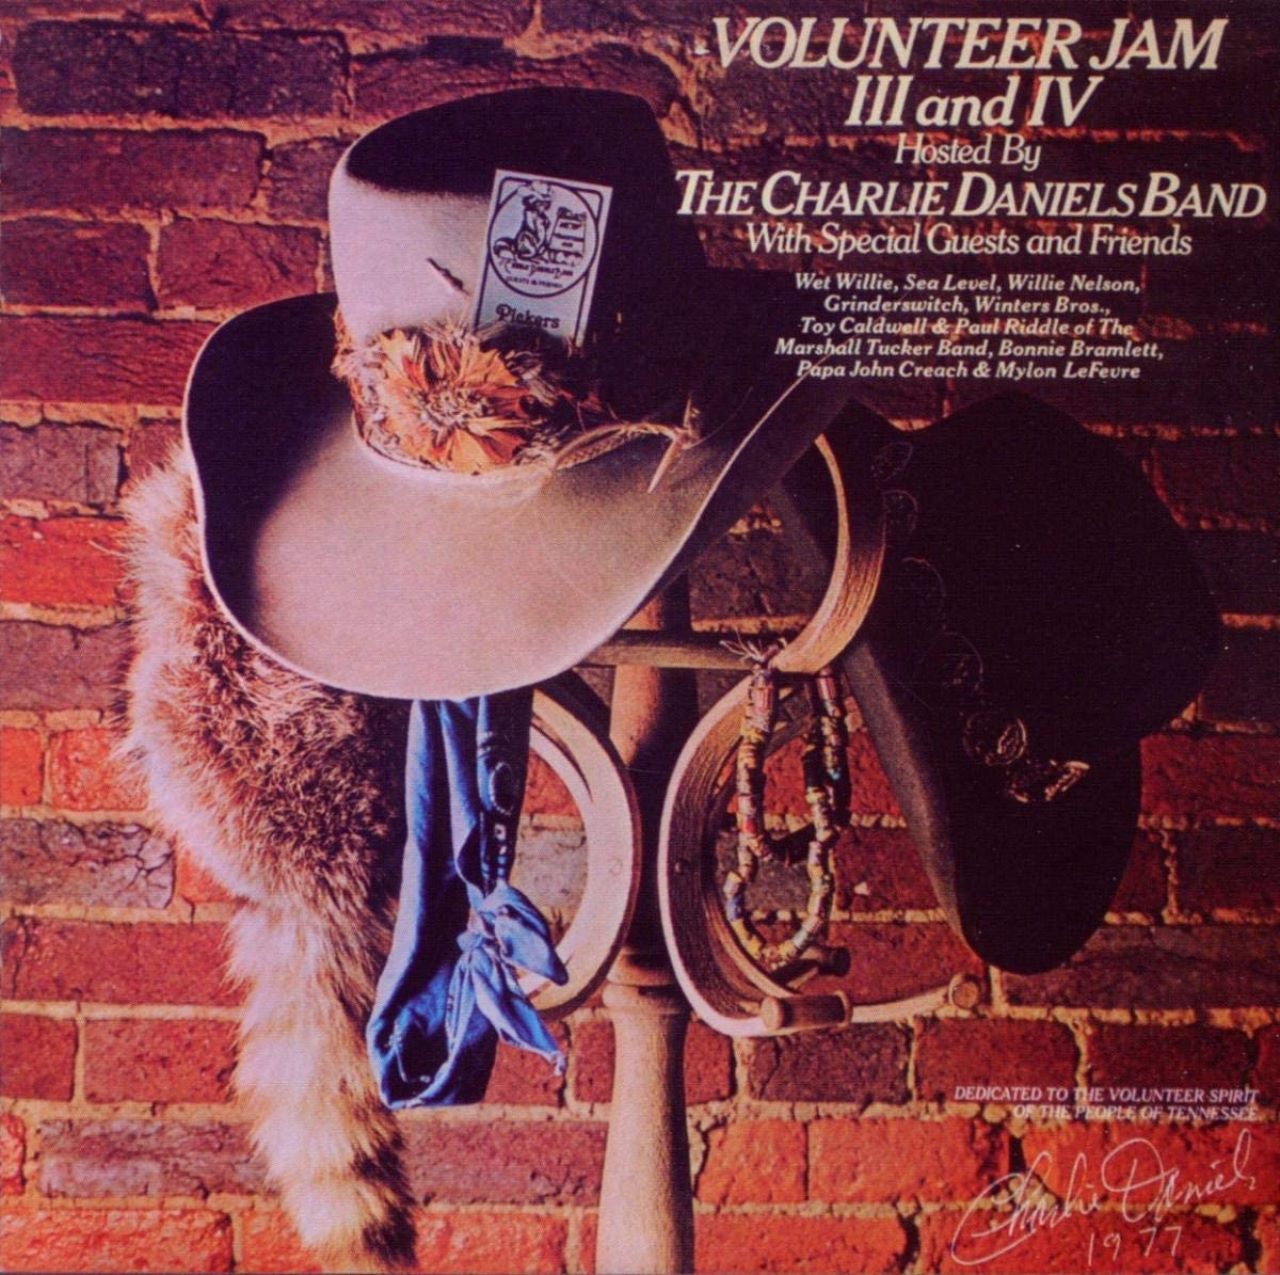 Charlie Daniels Band – Volunteer Jam III & IV cover album